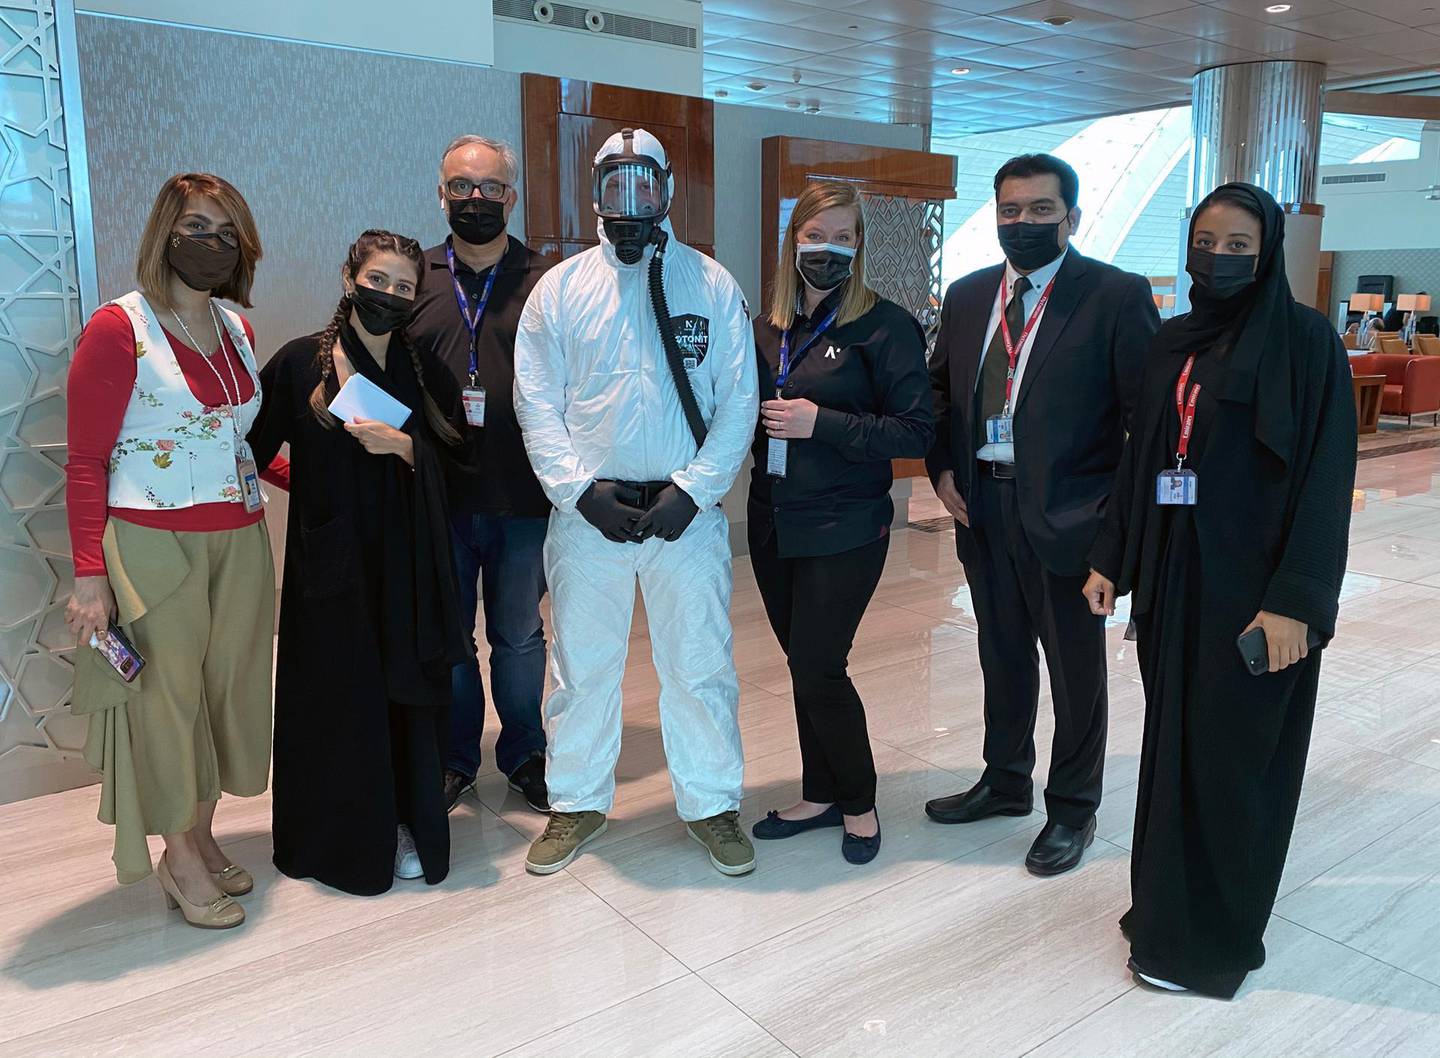 Nanoksi team in Emirates business class lounge at Dubai Airport with Emirates staff members. Nanoksi .